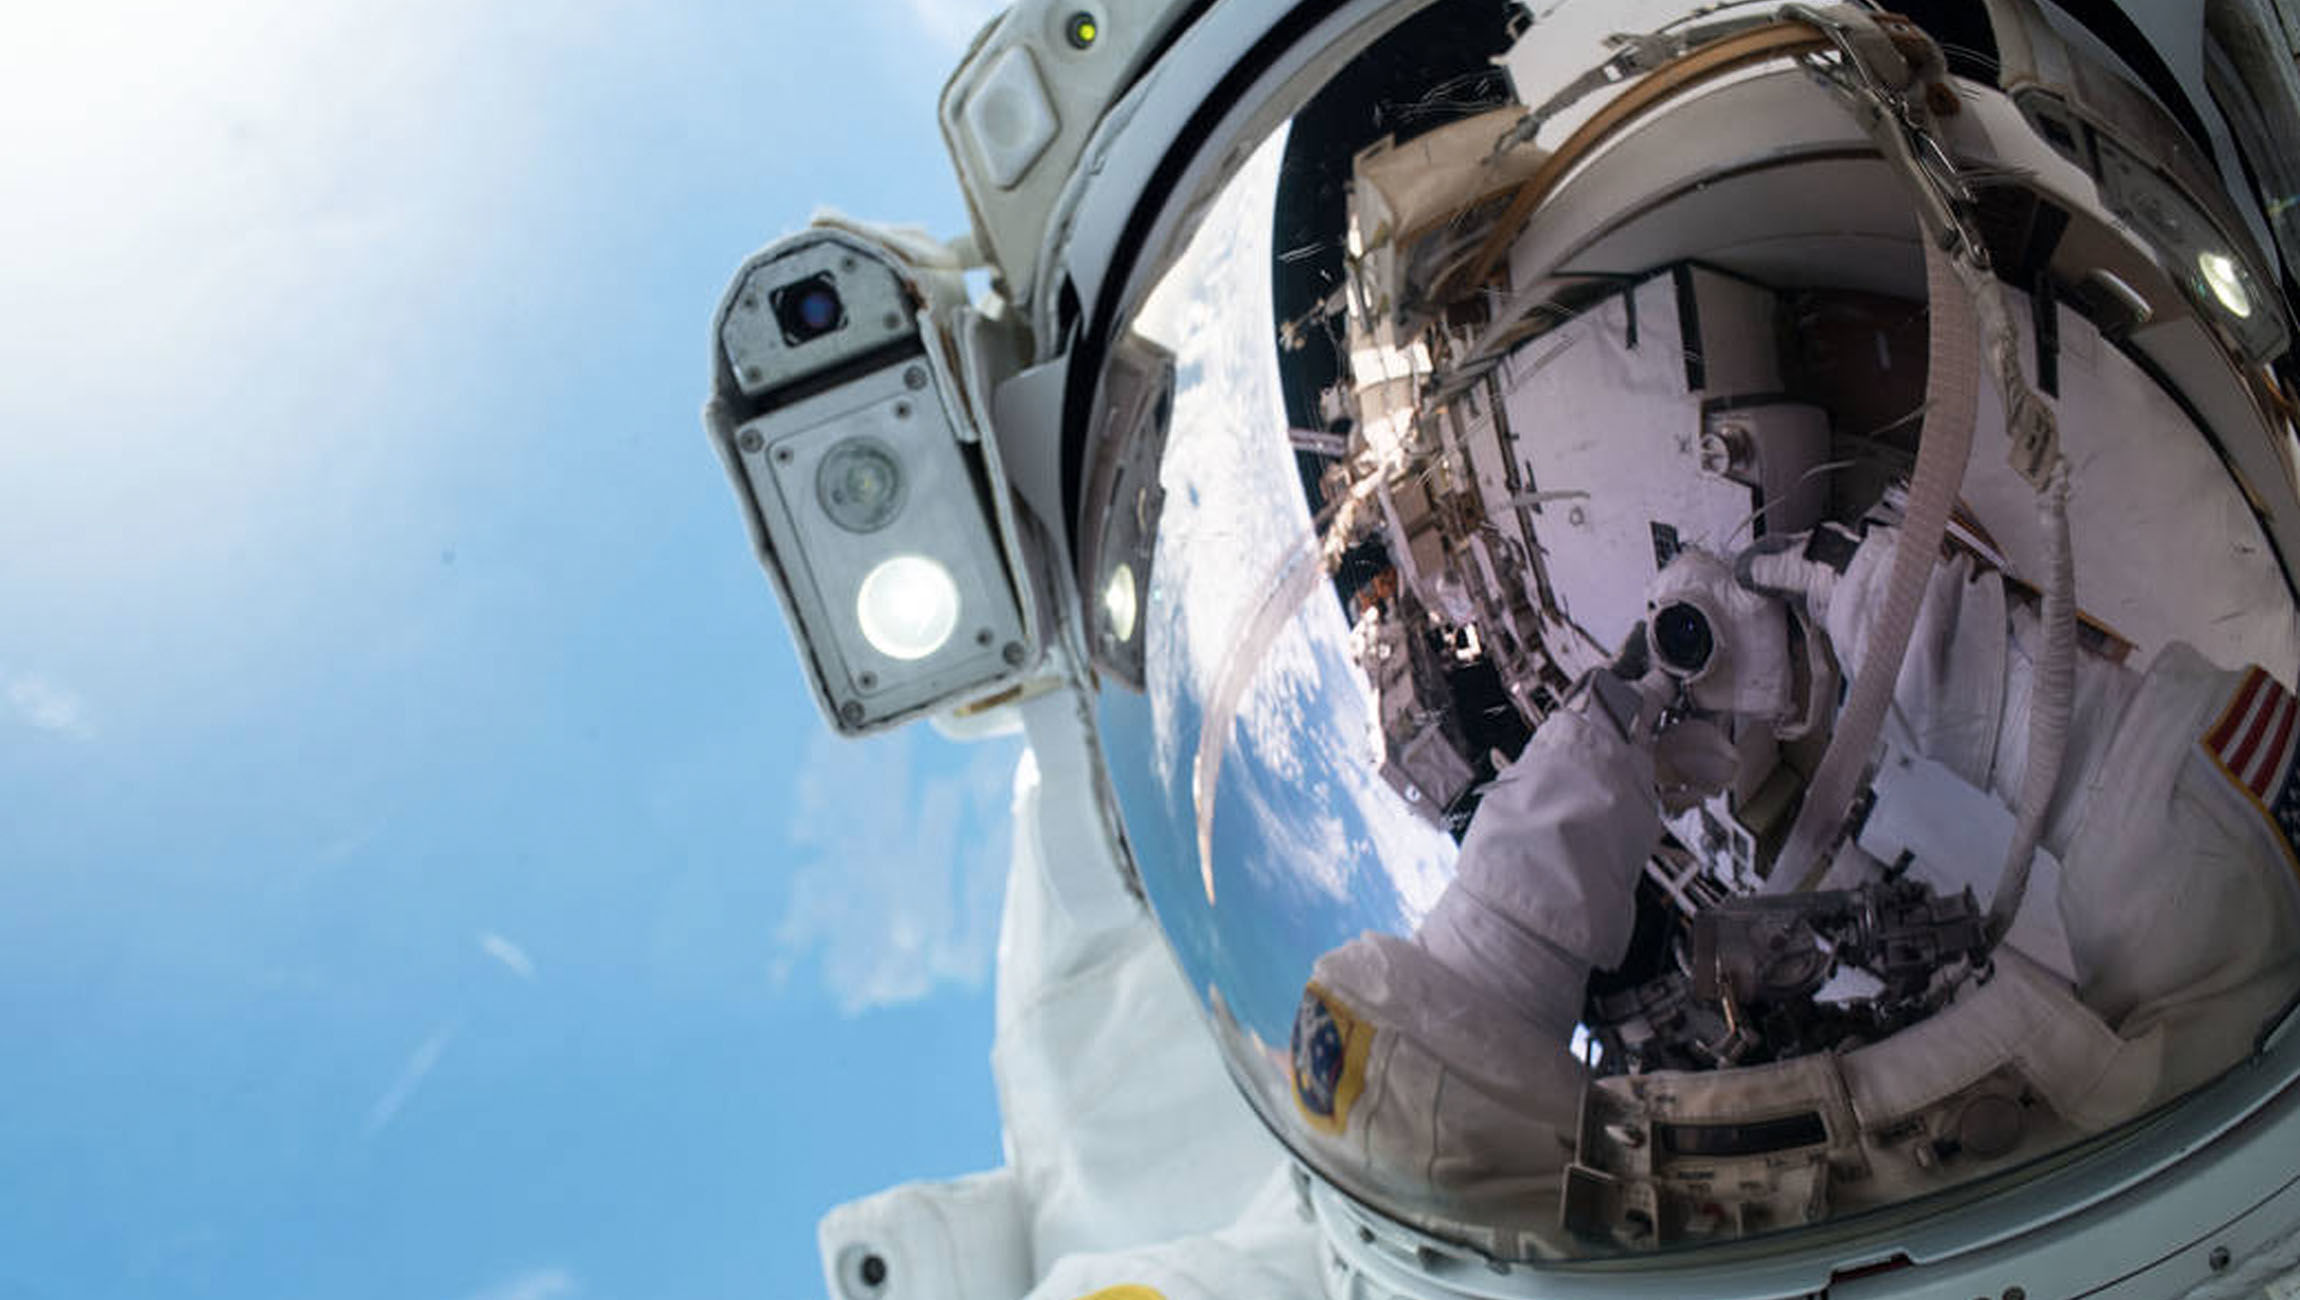 NASA astronaut image